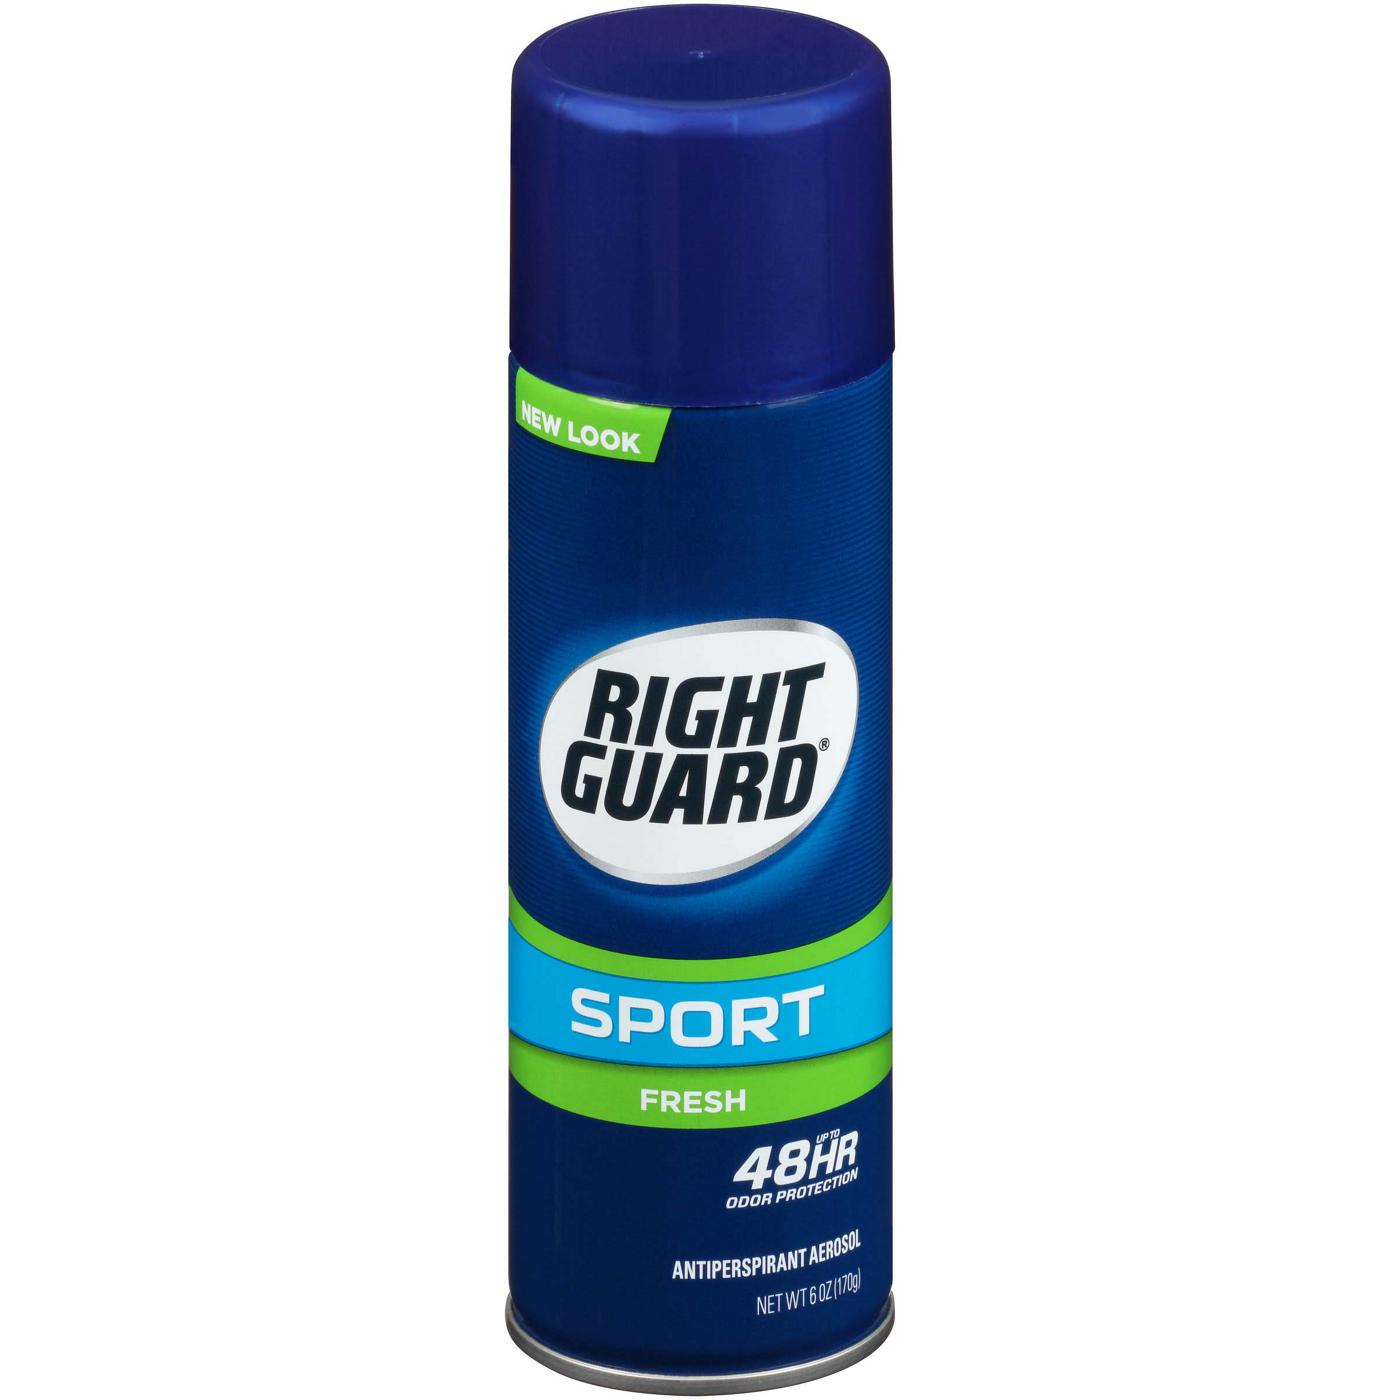 Right Guard Sport Antiperspirant Deodorant Spray - Fresh; image 1 of 3